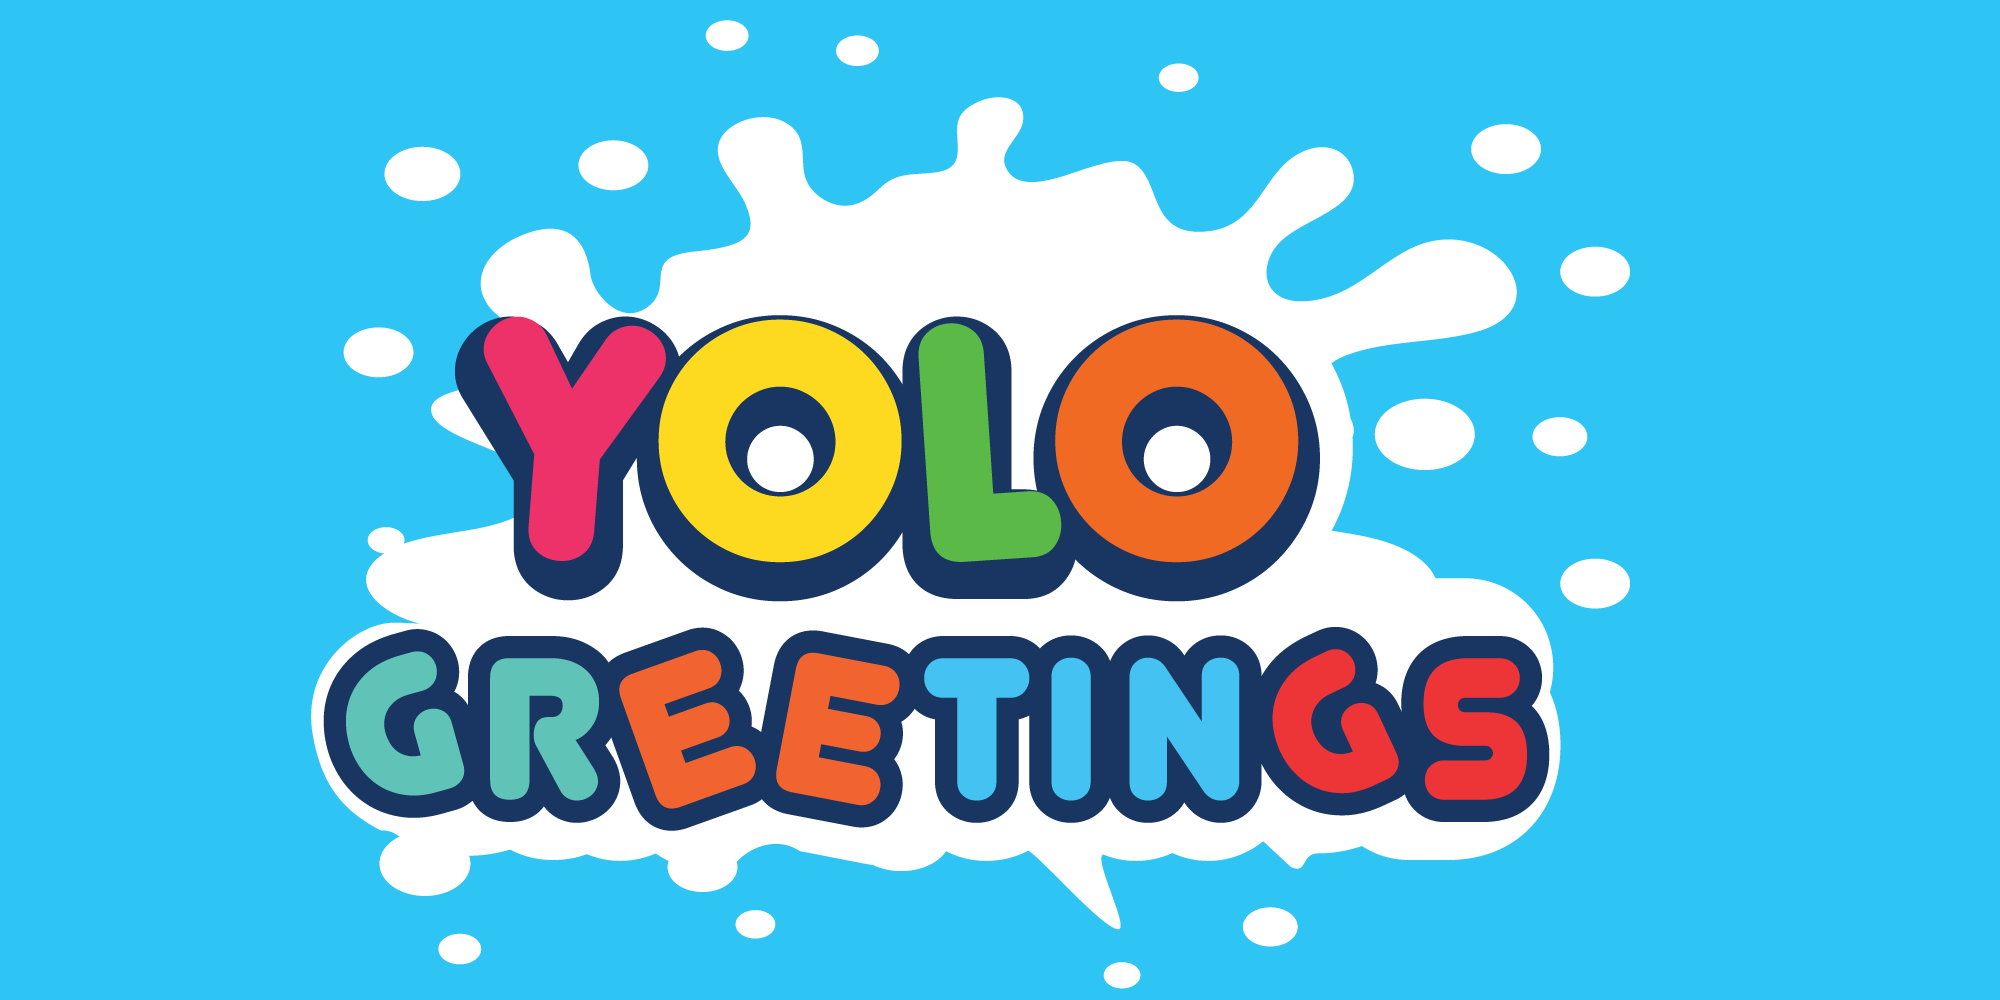 YOLO Greetings